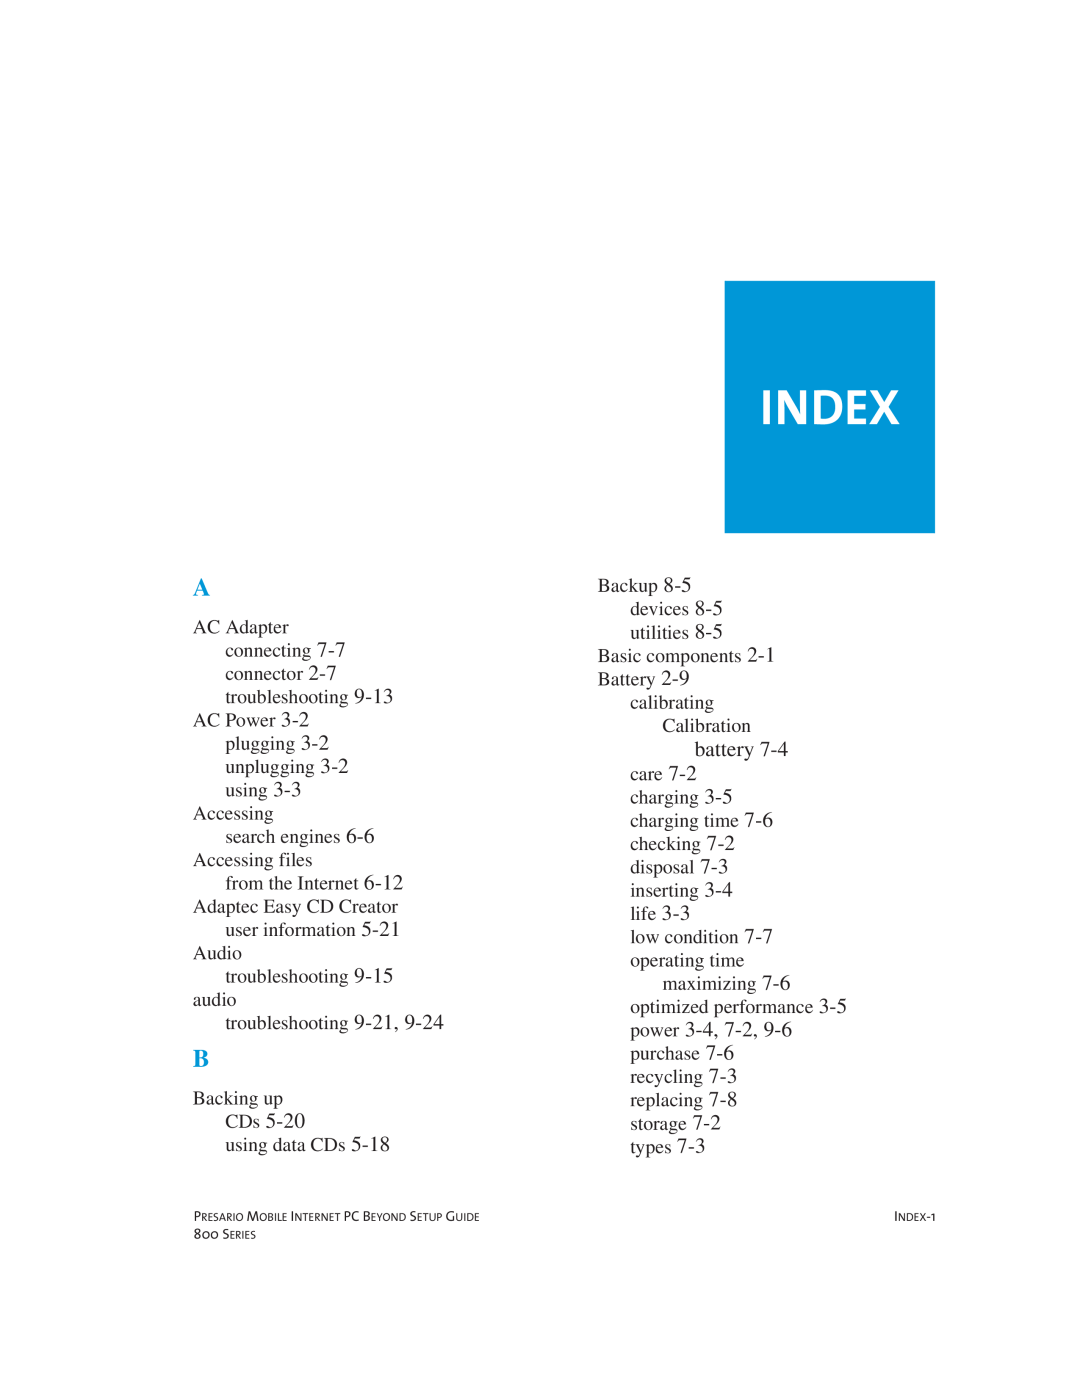 Compaq 800 manual Index 